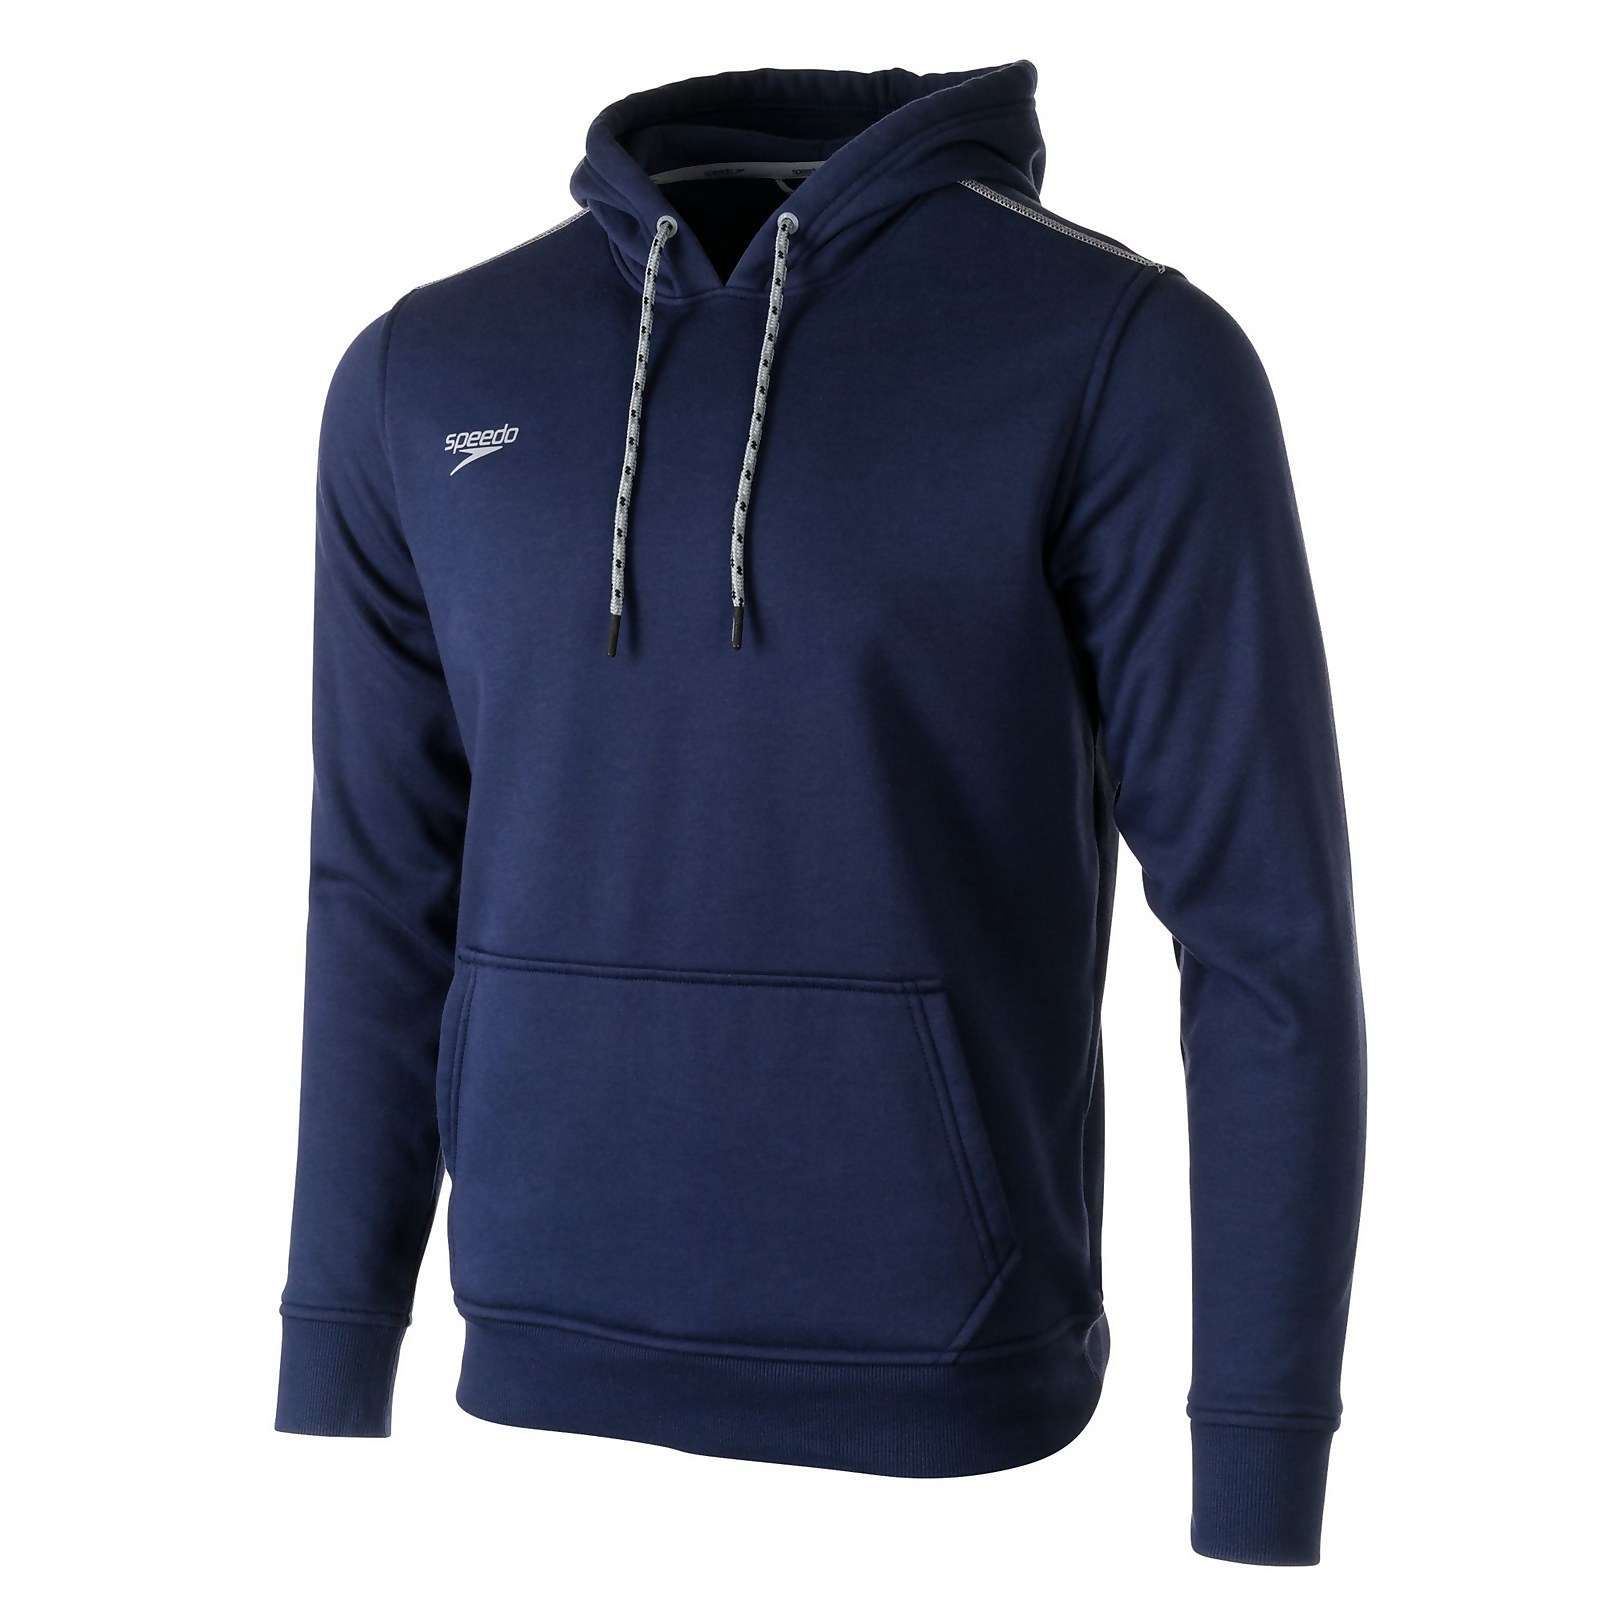 Speedo  Long Sleeve Hooded Sweatshirt - L    : Navy